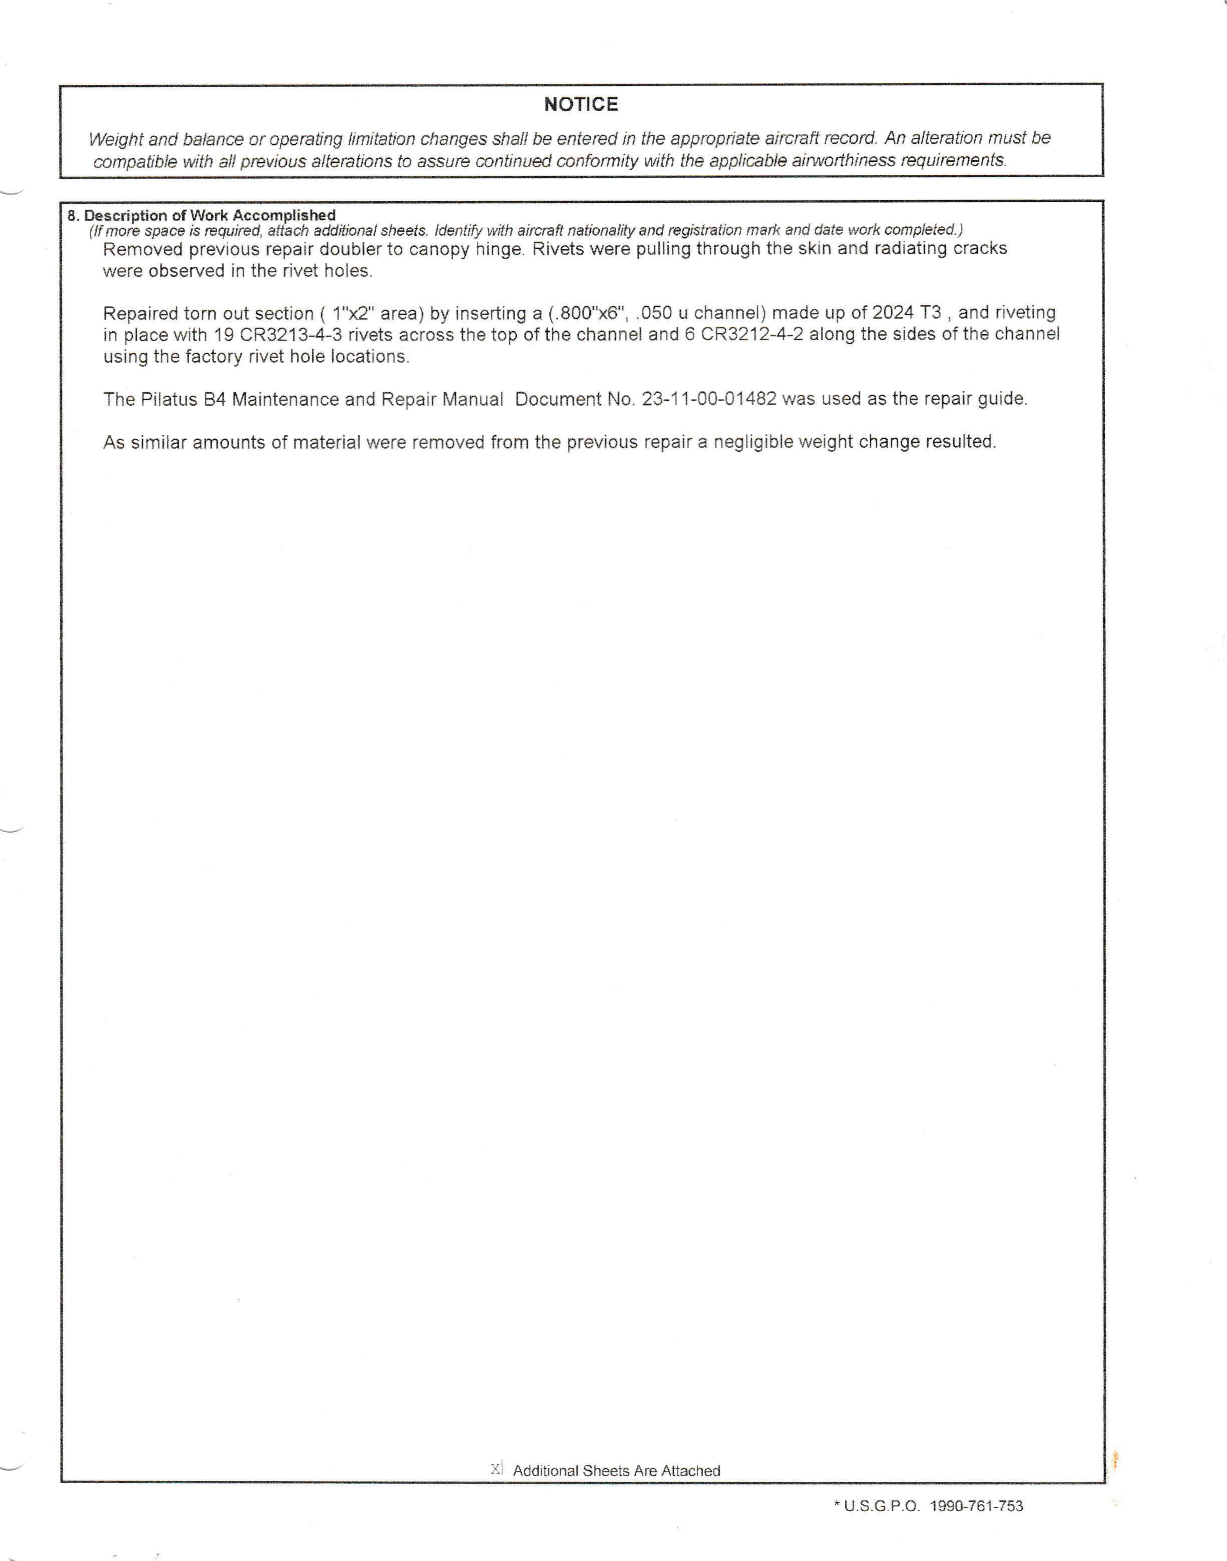 Page 4 of 6 - B-4 N65317 From 337 Major Repair 2015-12-10